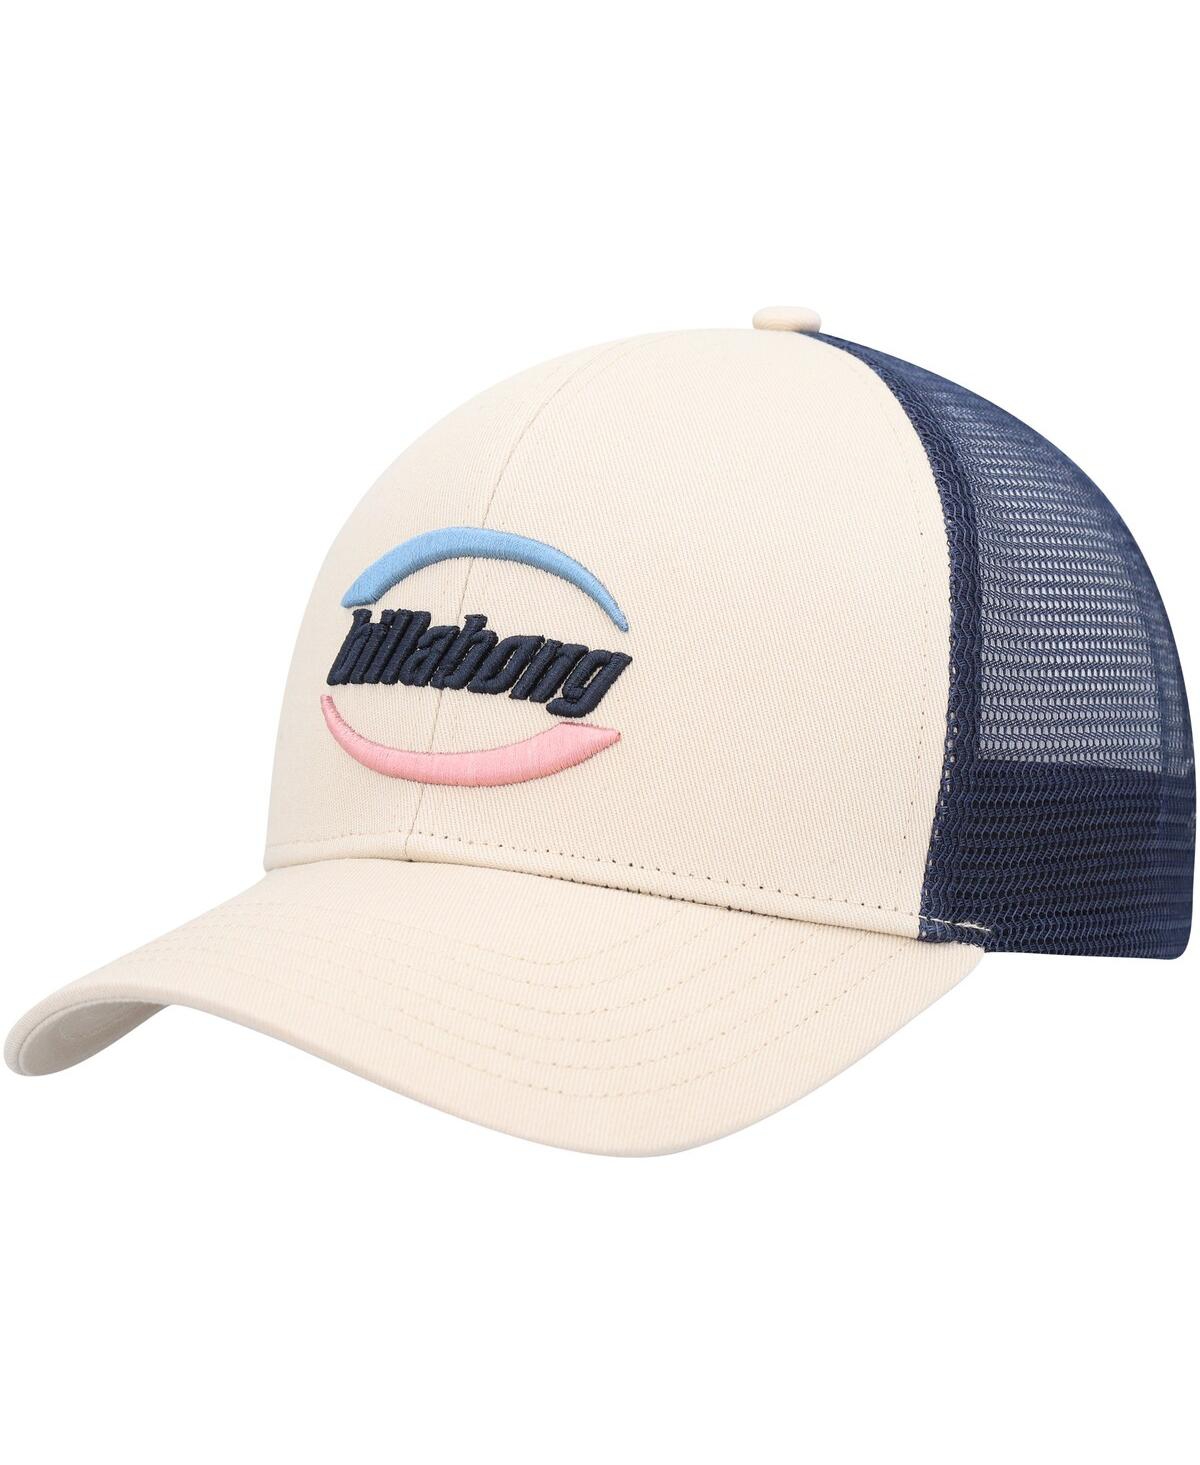 Men's Billabong Cream, Navy Walled Trucker Adjustable Snapback Hat - Cream, Navy